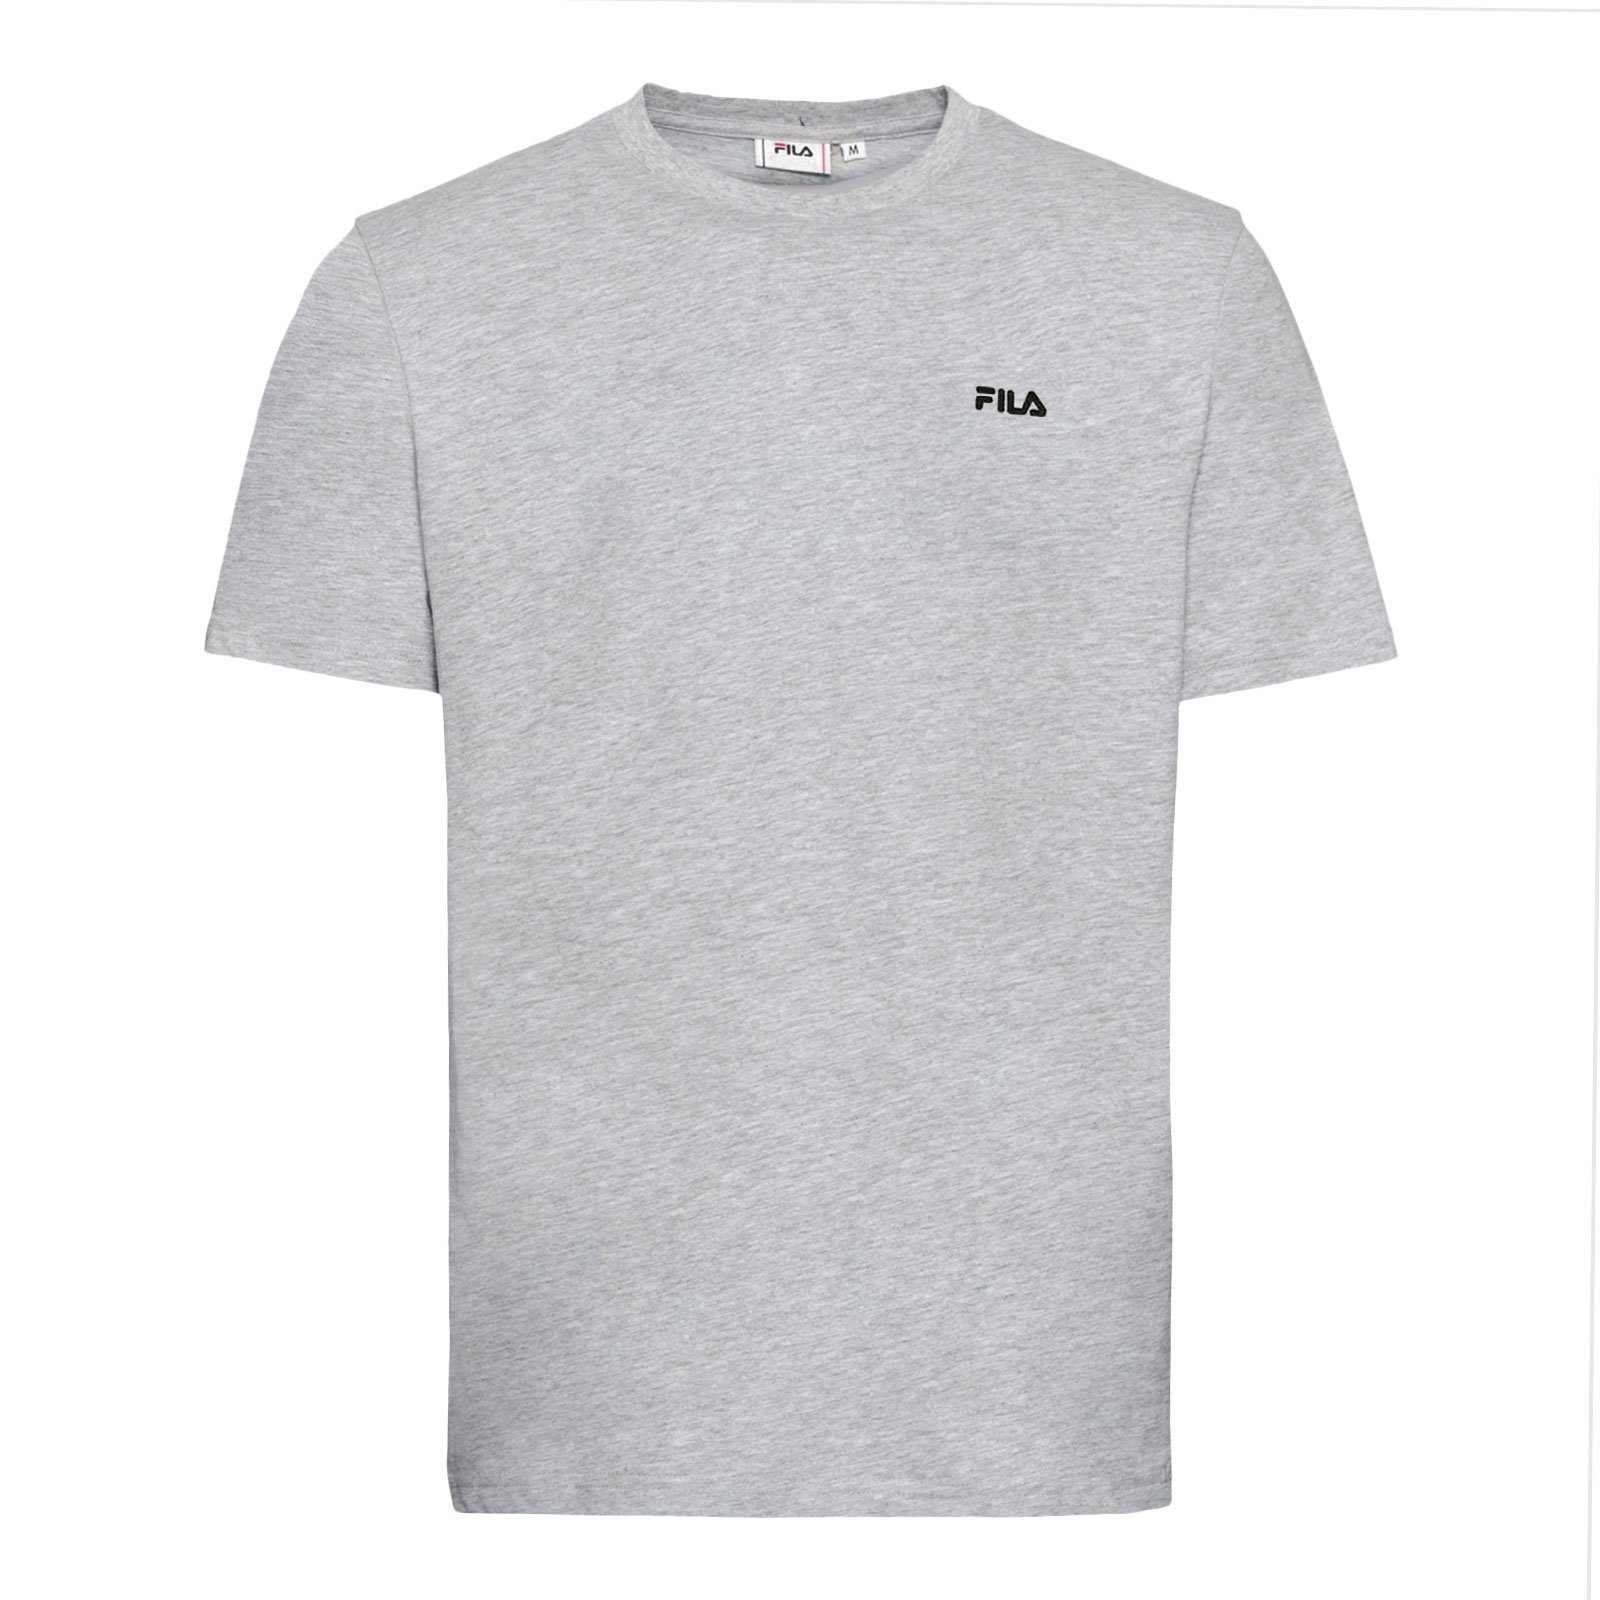 Fila T-Shirt Berloz Tee aus melange light Bio-Baumwolle 80000 grey